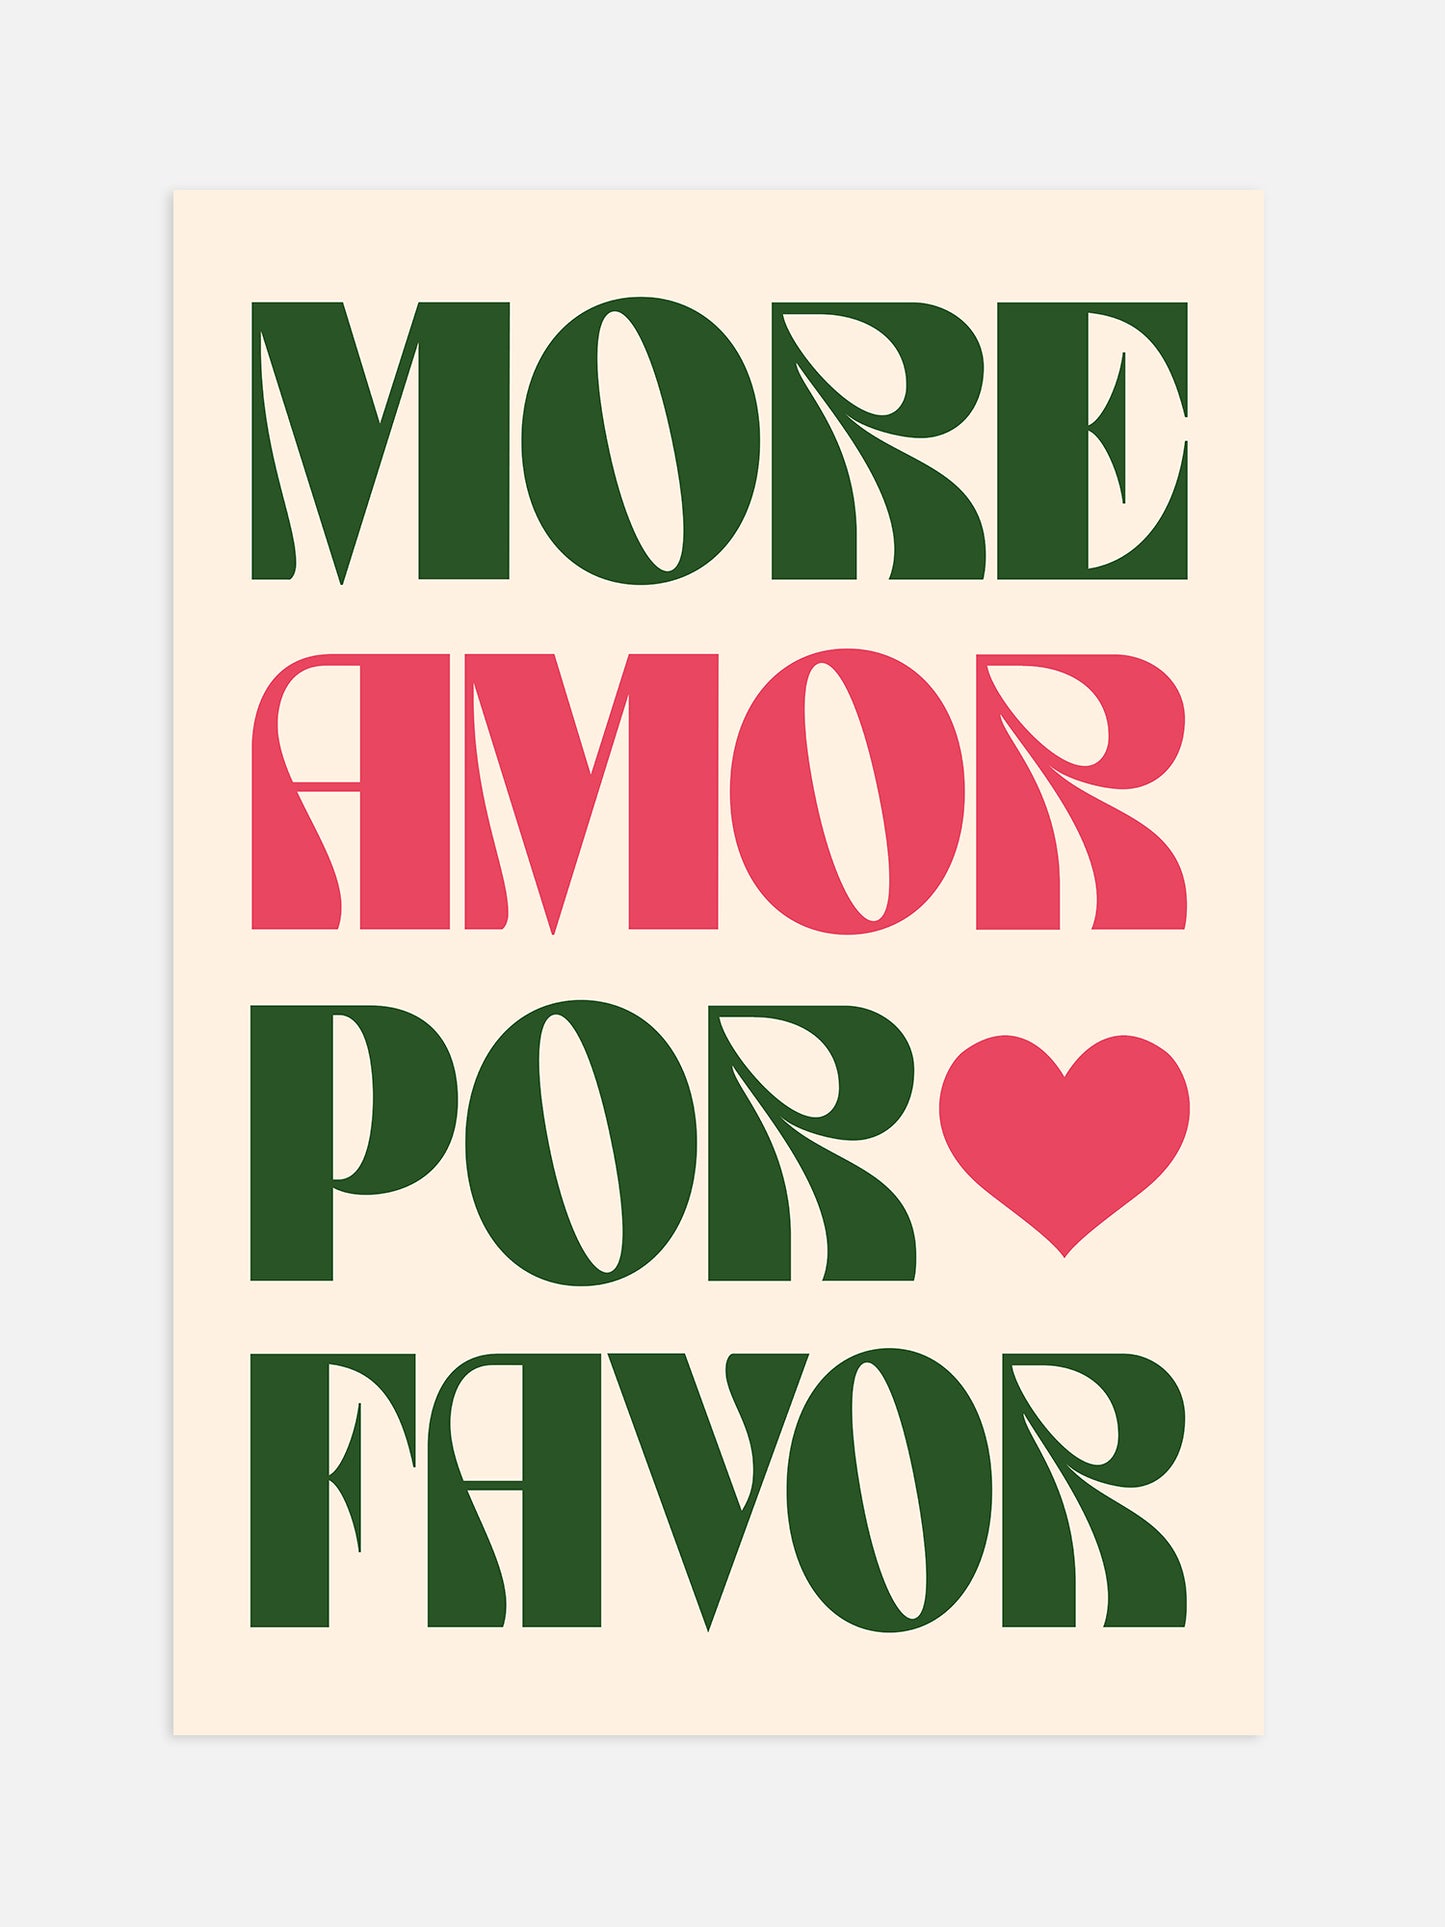 More Amor Por Favor Poster